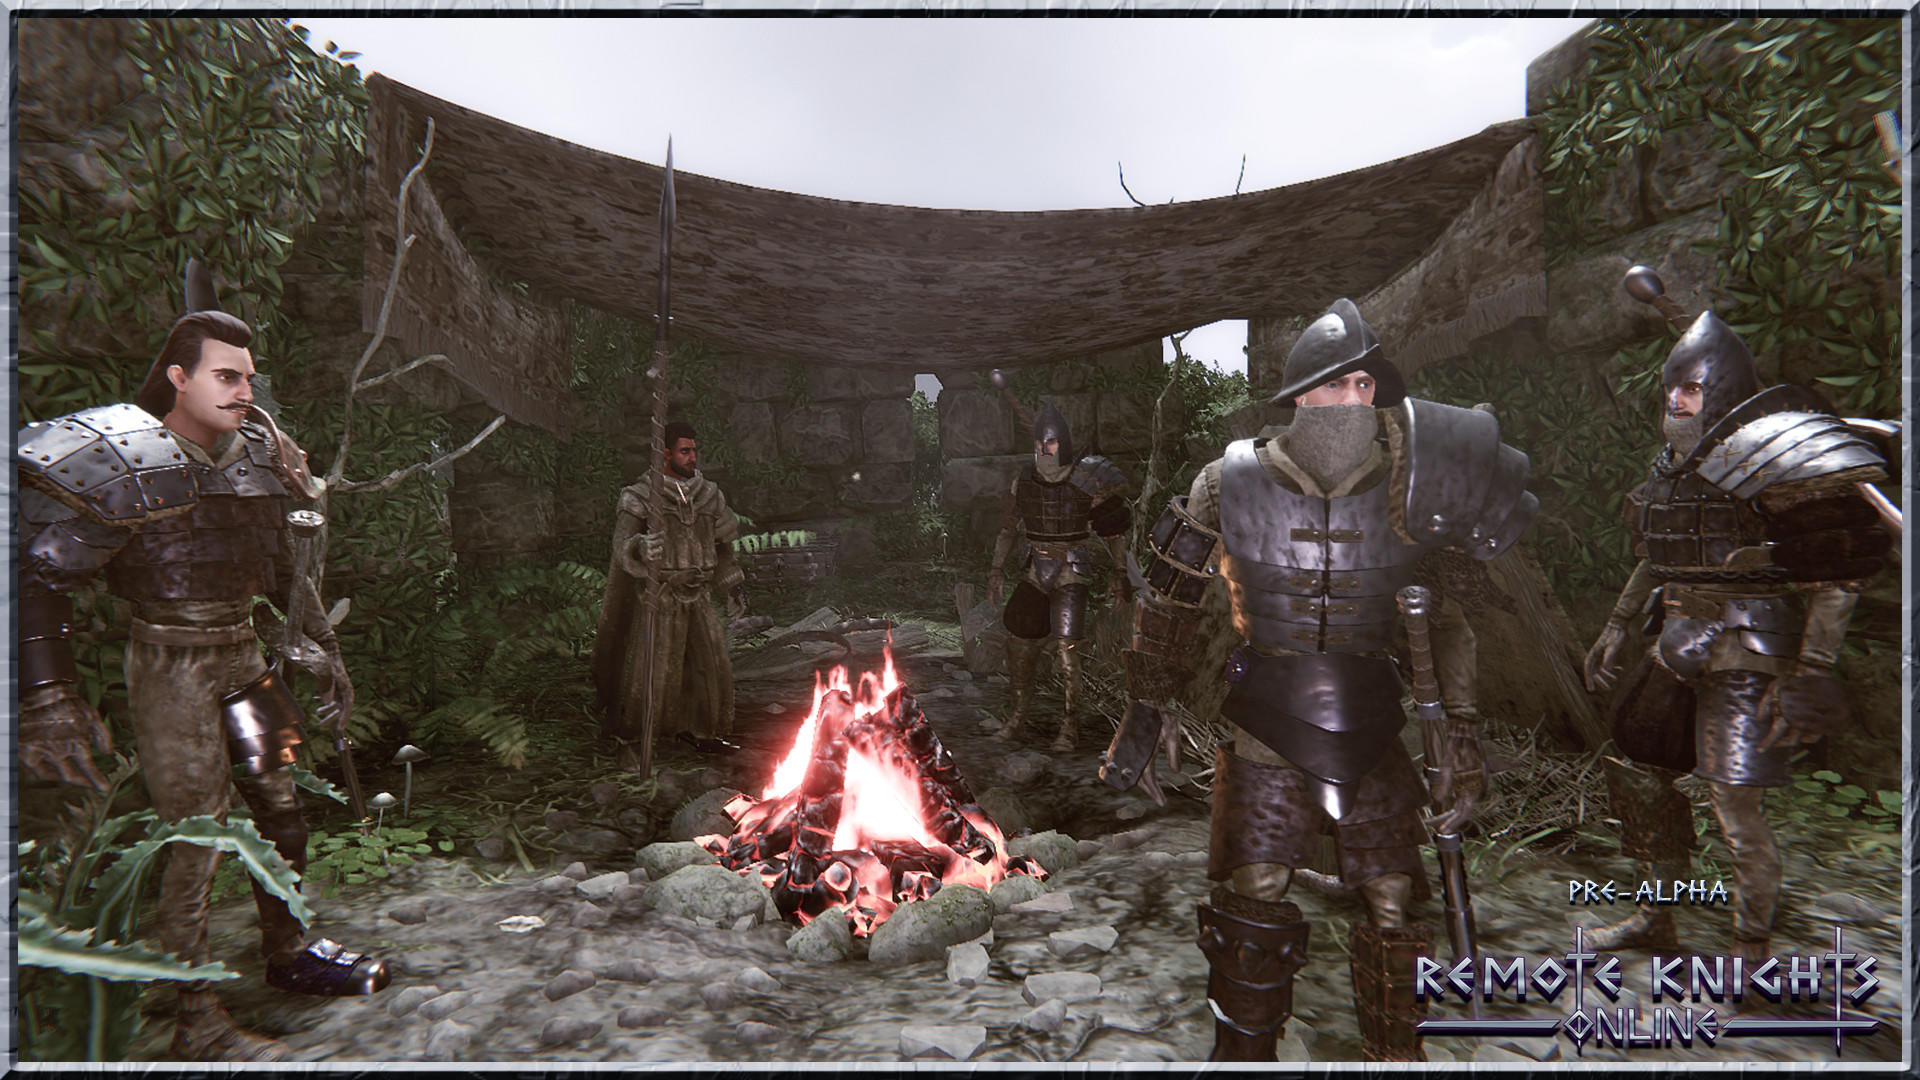 Screenshot of Remote Knights Online